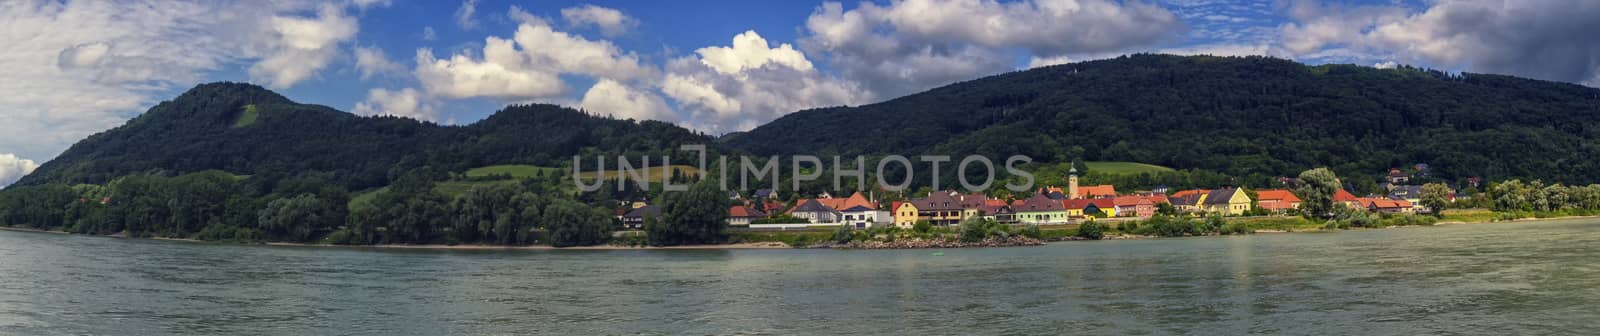 Village of Willendorf on the river Danube in the Wachau region, Austria by Elenaphotos21